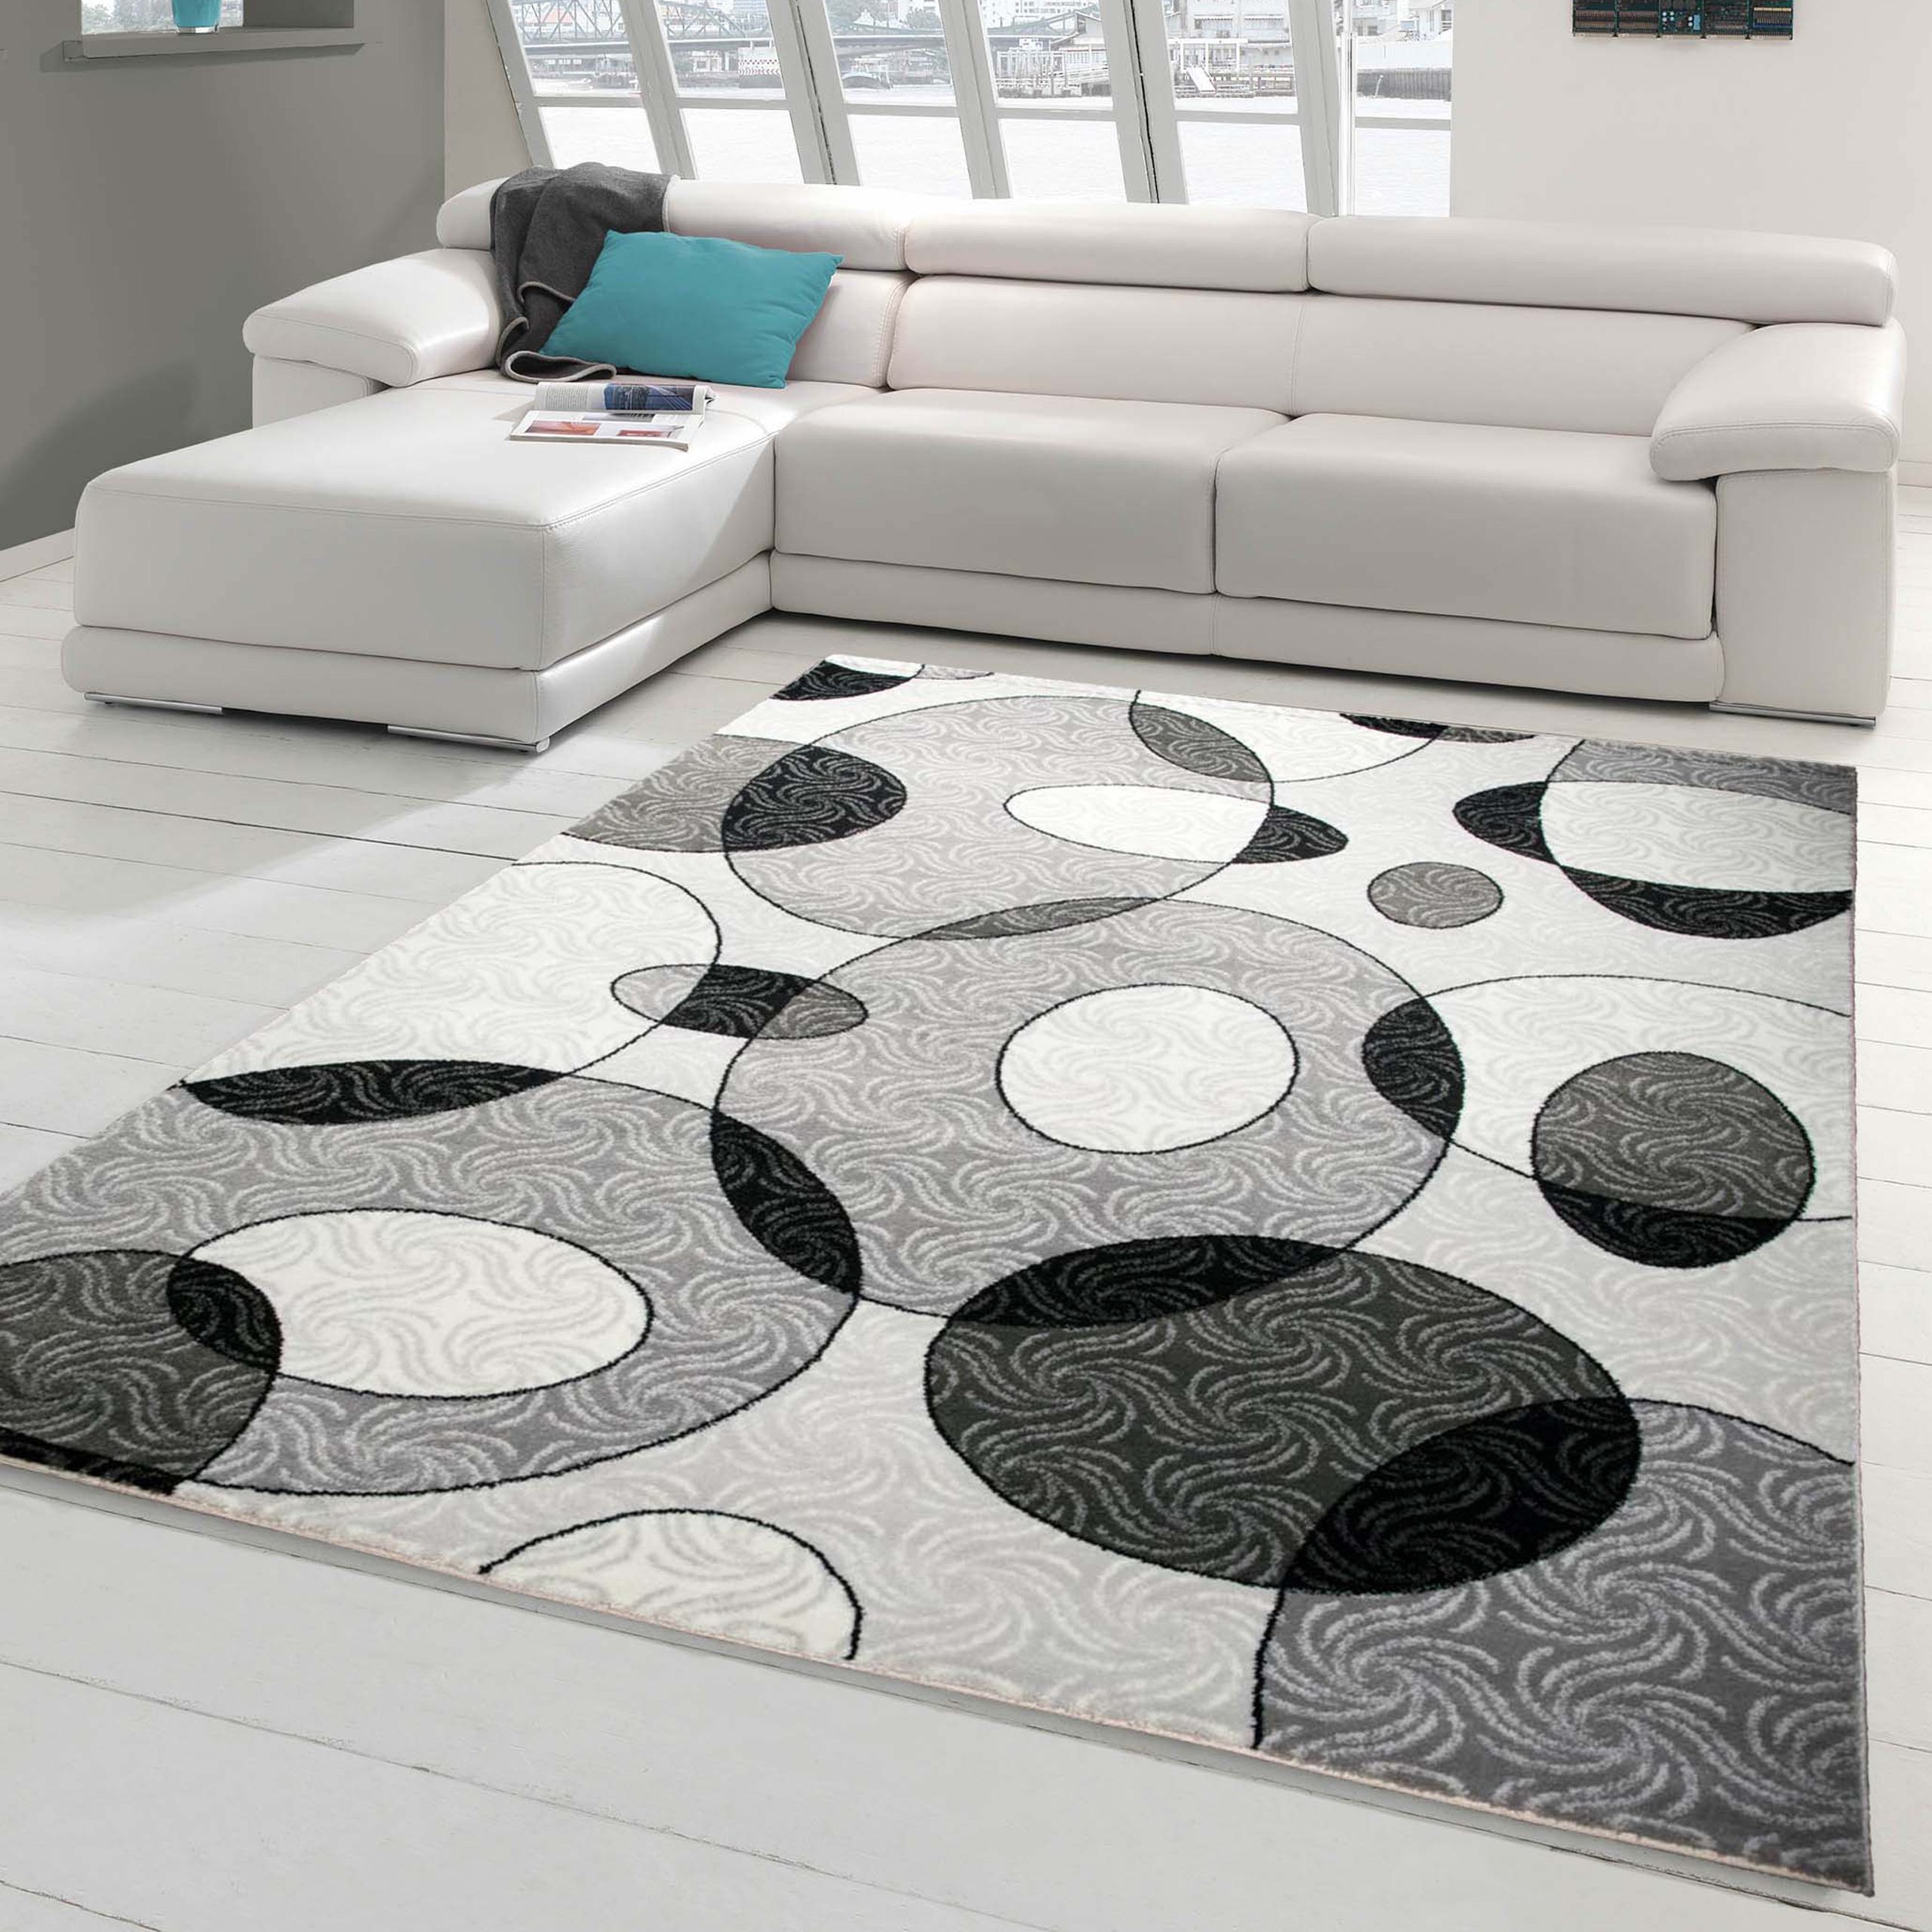 Modern & designer carpets: High-quality - -Traum carpet cheap at and Teppich dreams